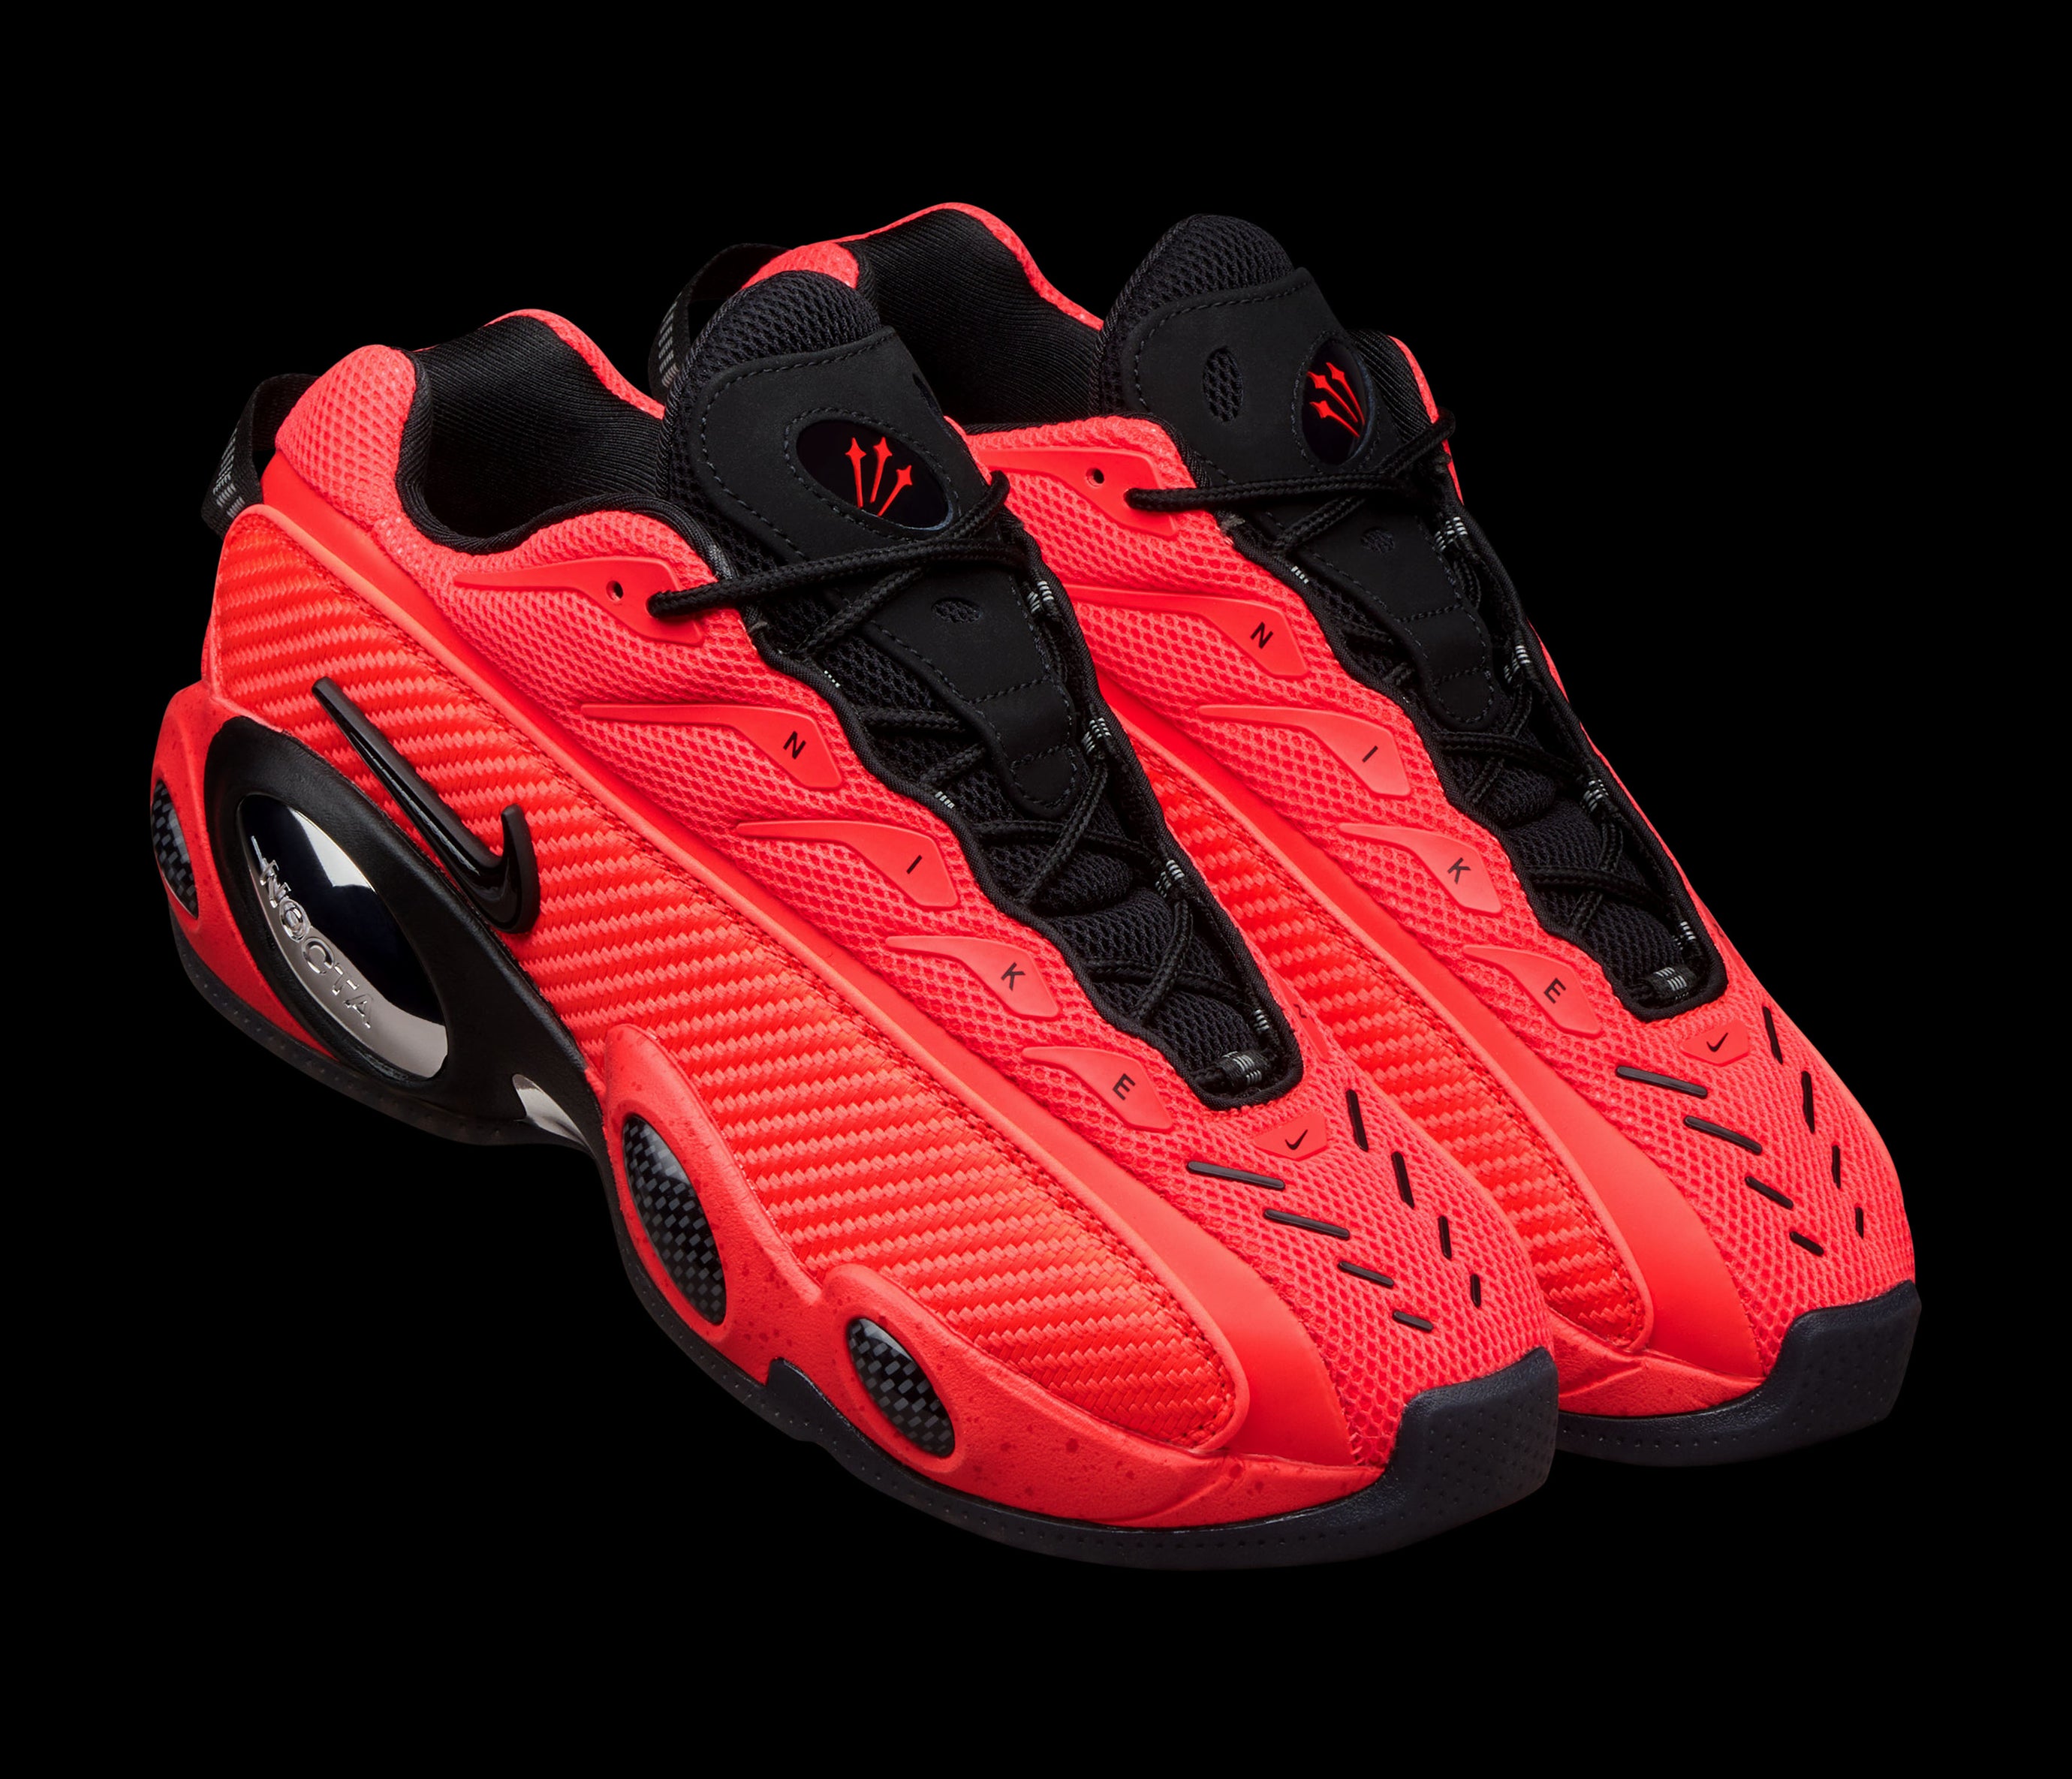 Drake Nike Nocta Glide Crimson Red Release Date Pair